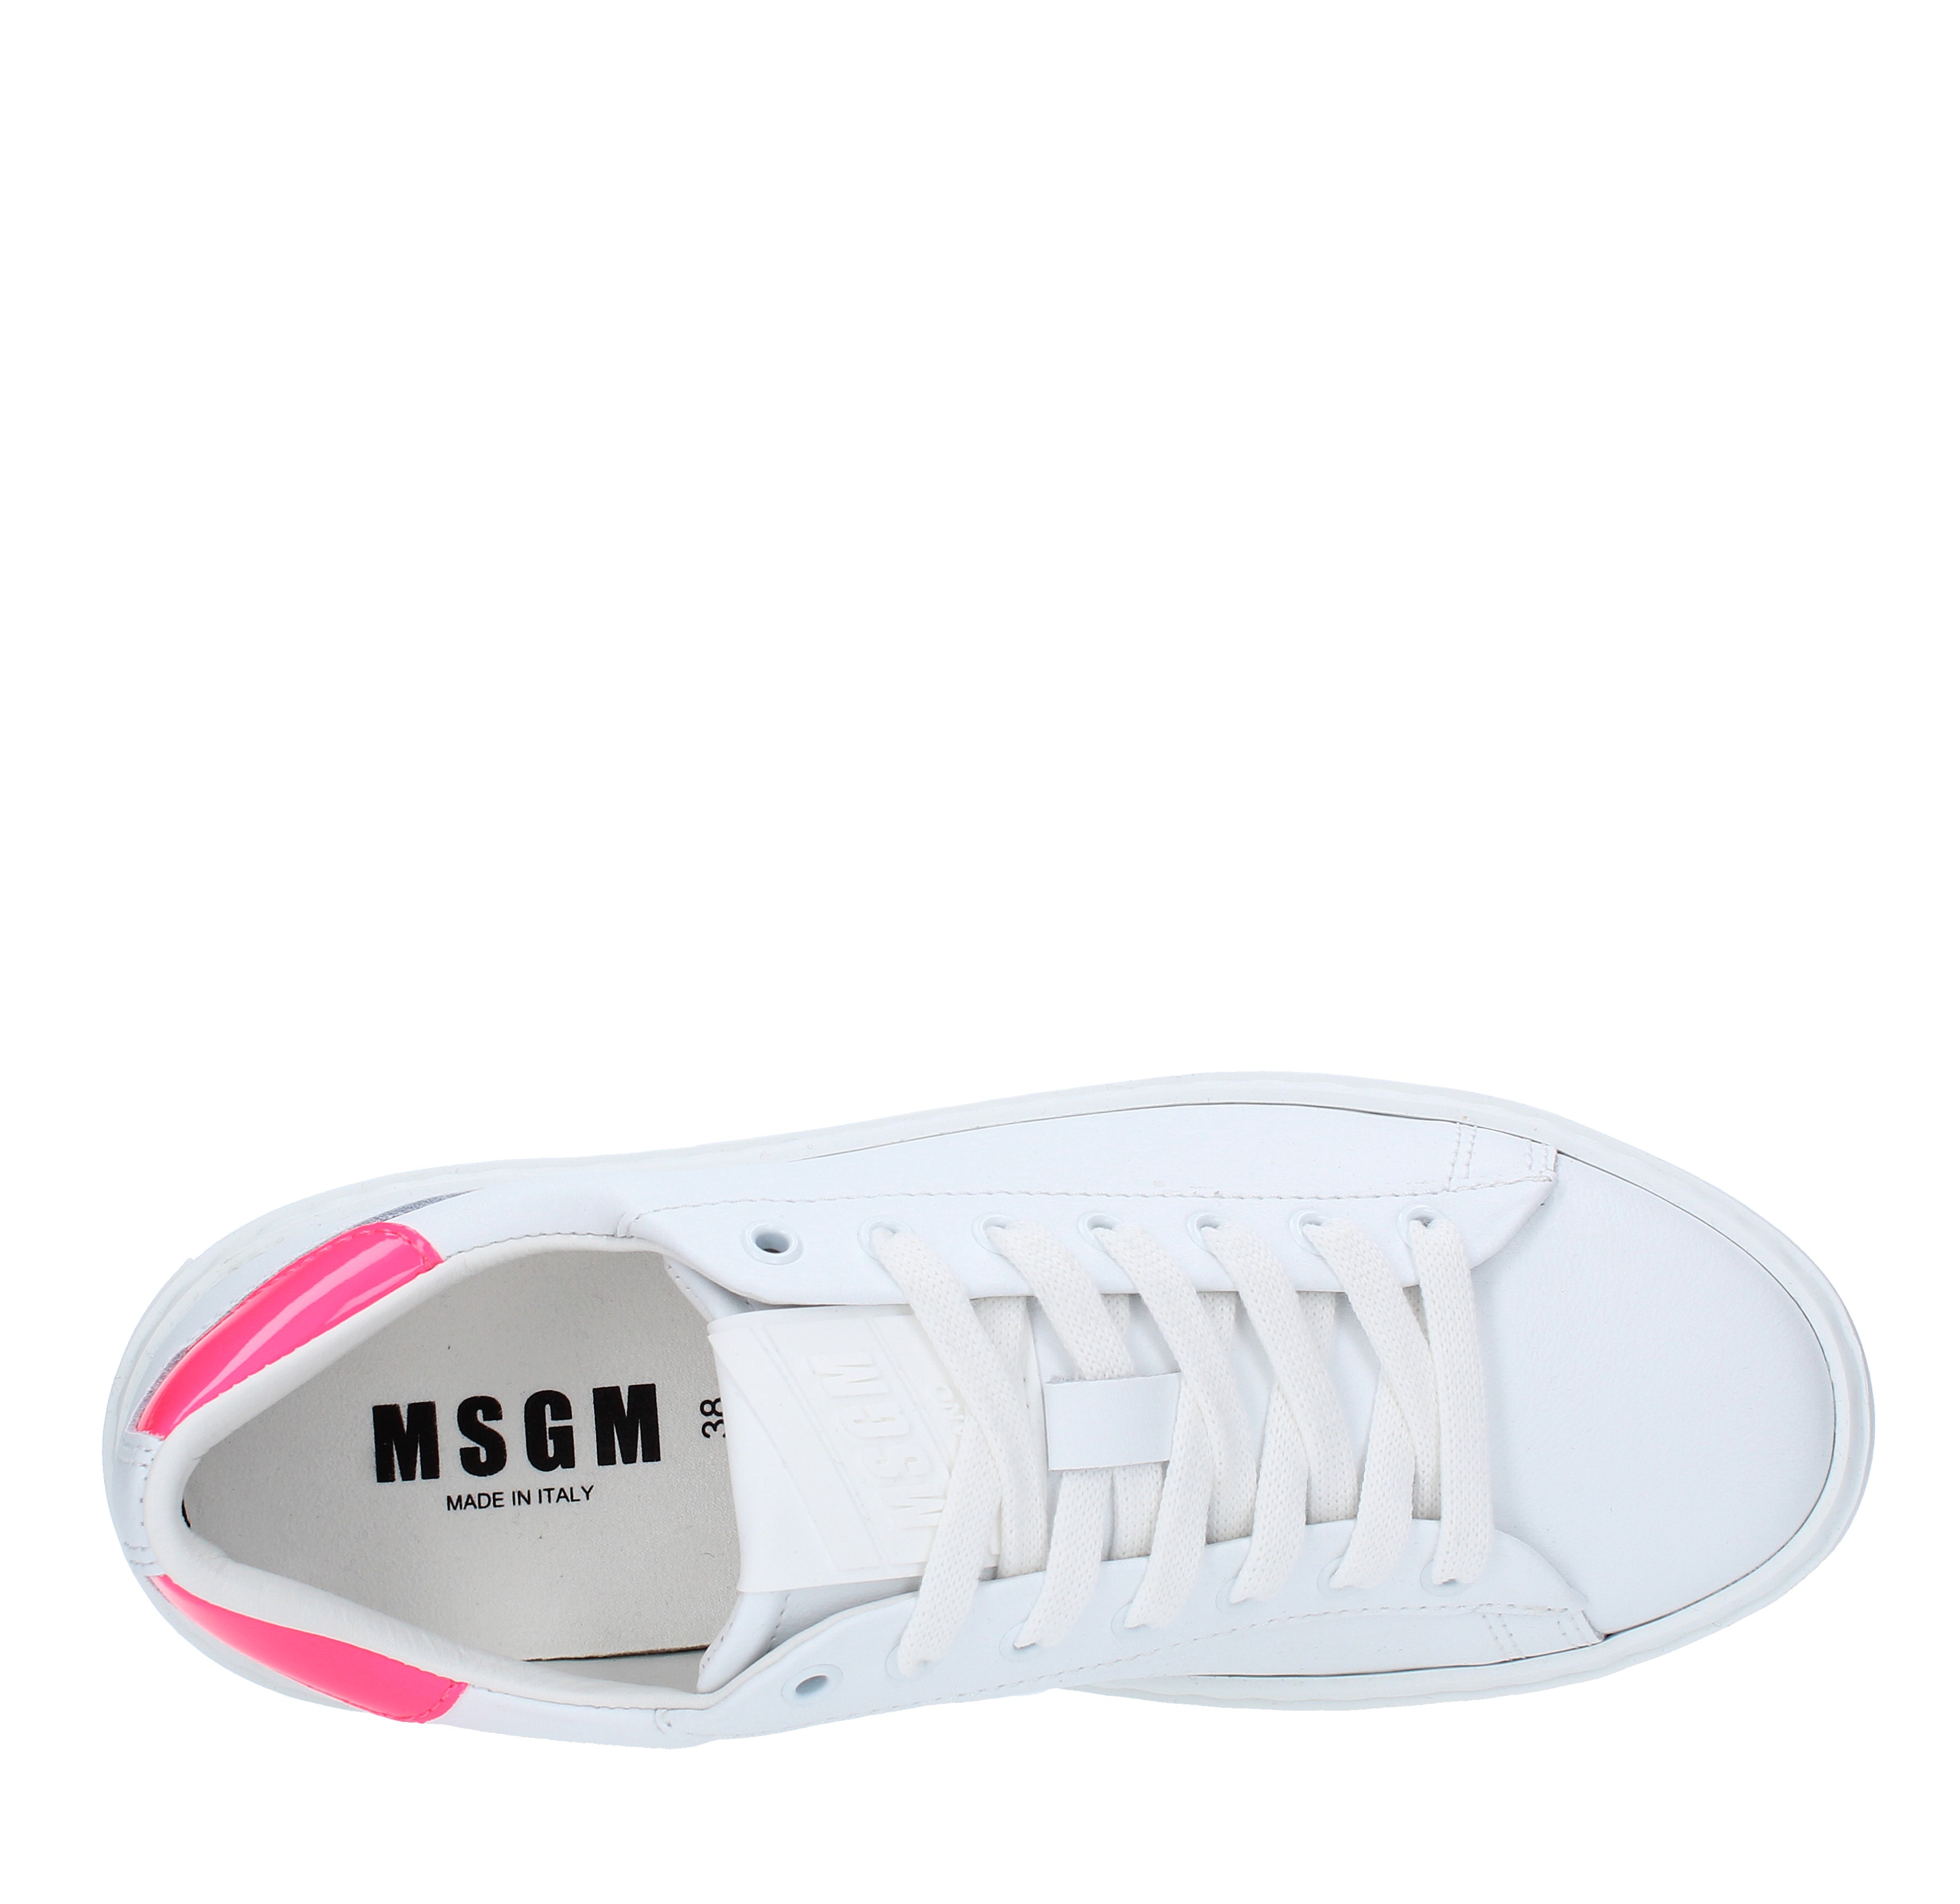 Sneakers in pelle - MSGM - Ginevra calzature